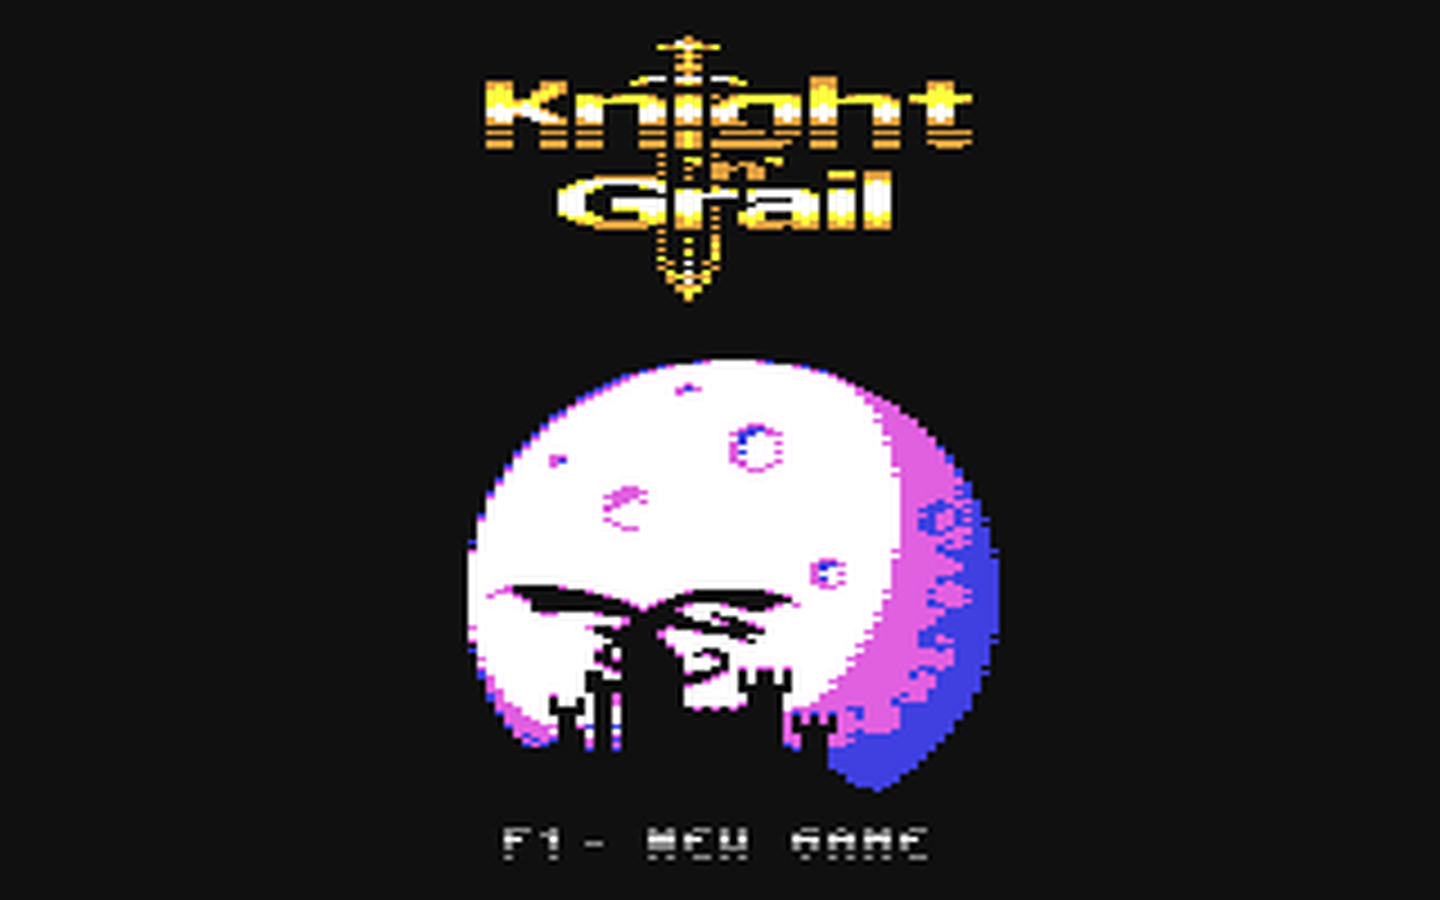 C64 GameBase Knight'n'Grail Psytronik_Software 2009